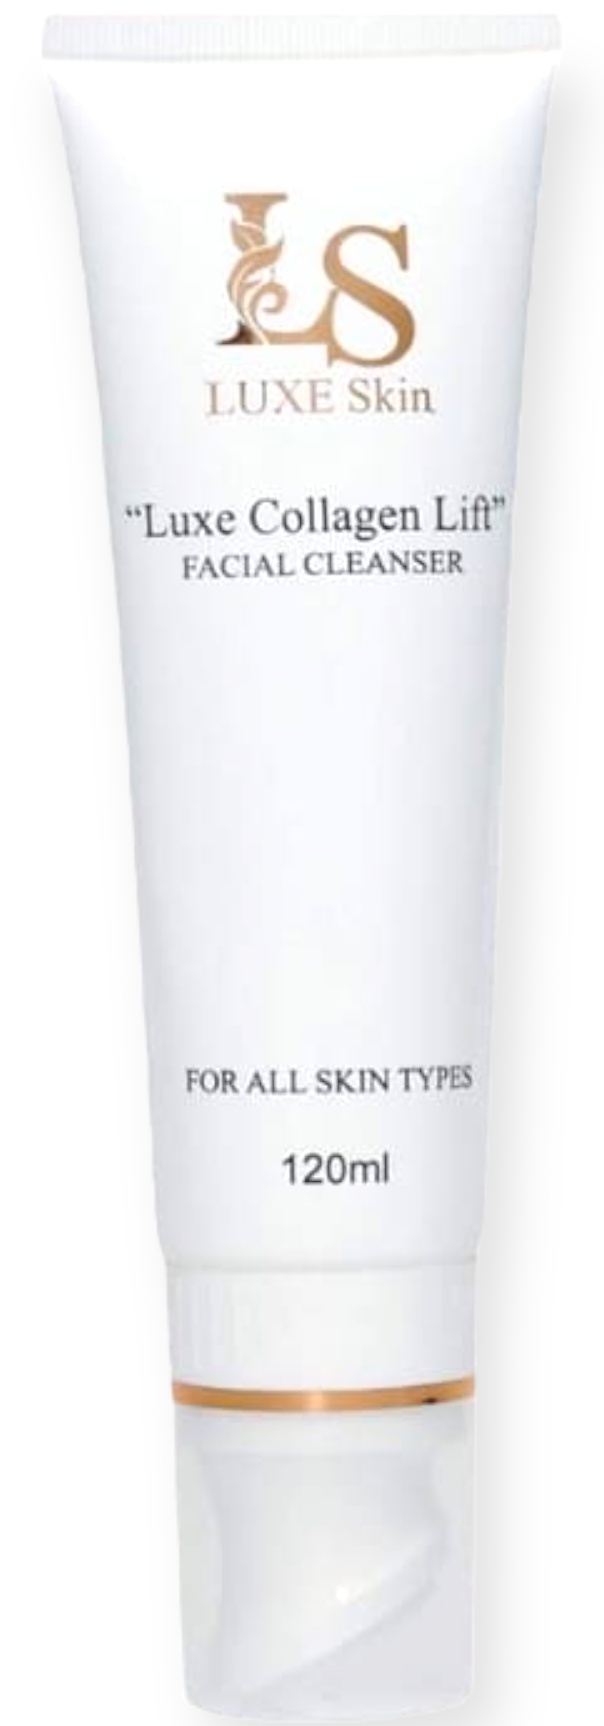 Luxe Skin Luxe Collagen Lift Facial Cleanser